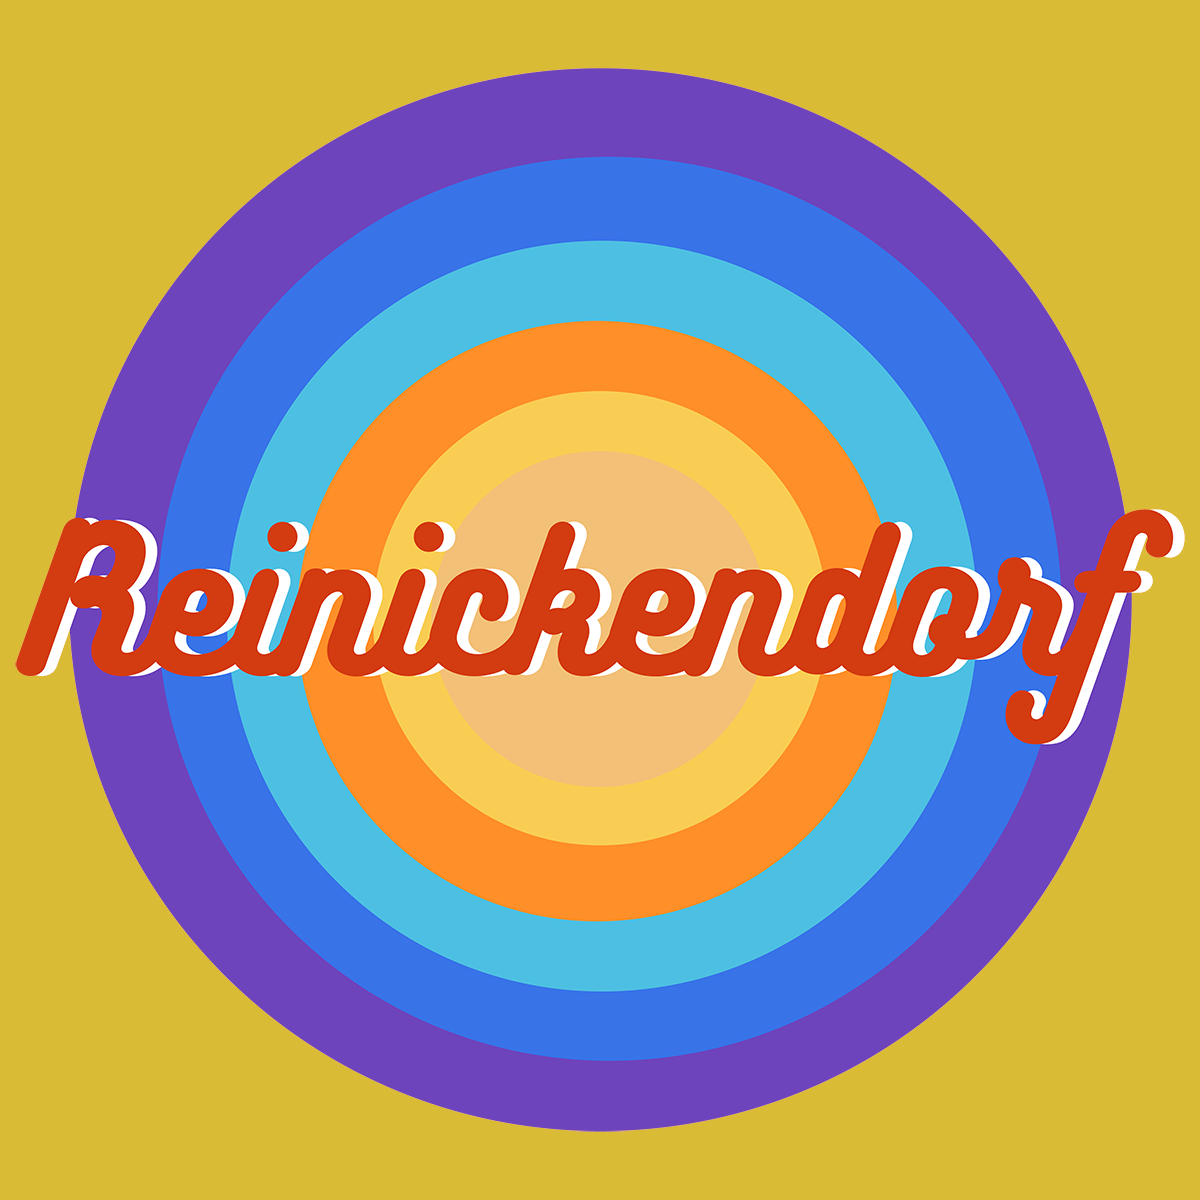 Reinickendorf retro